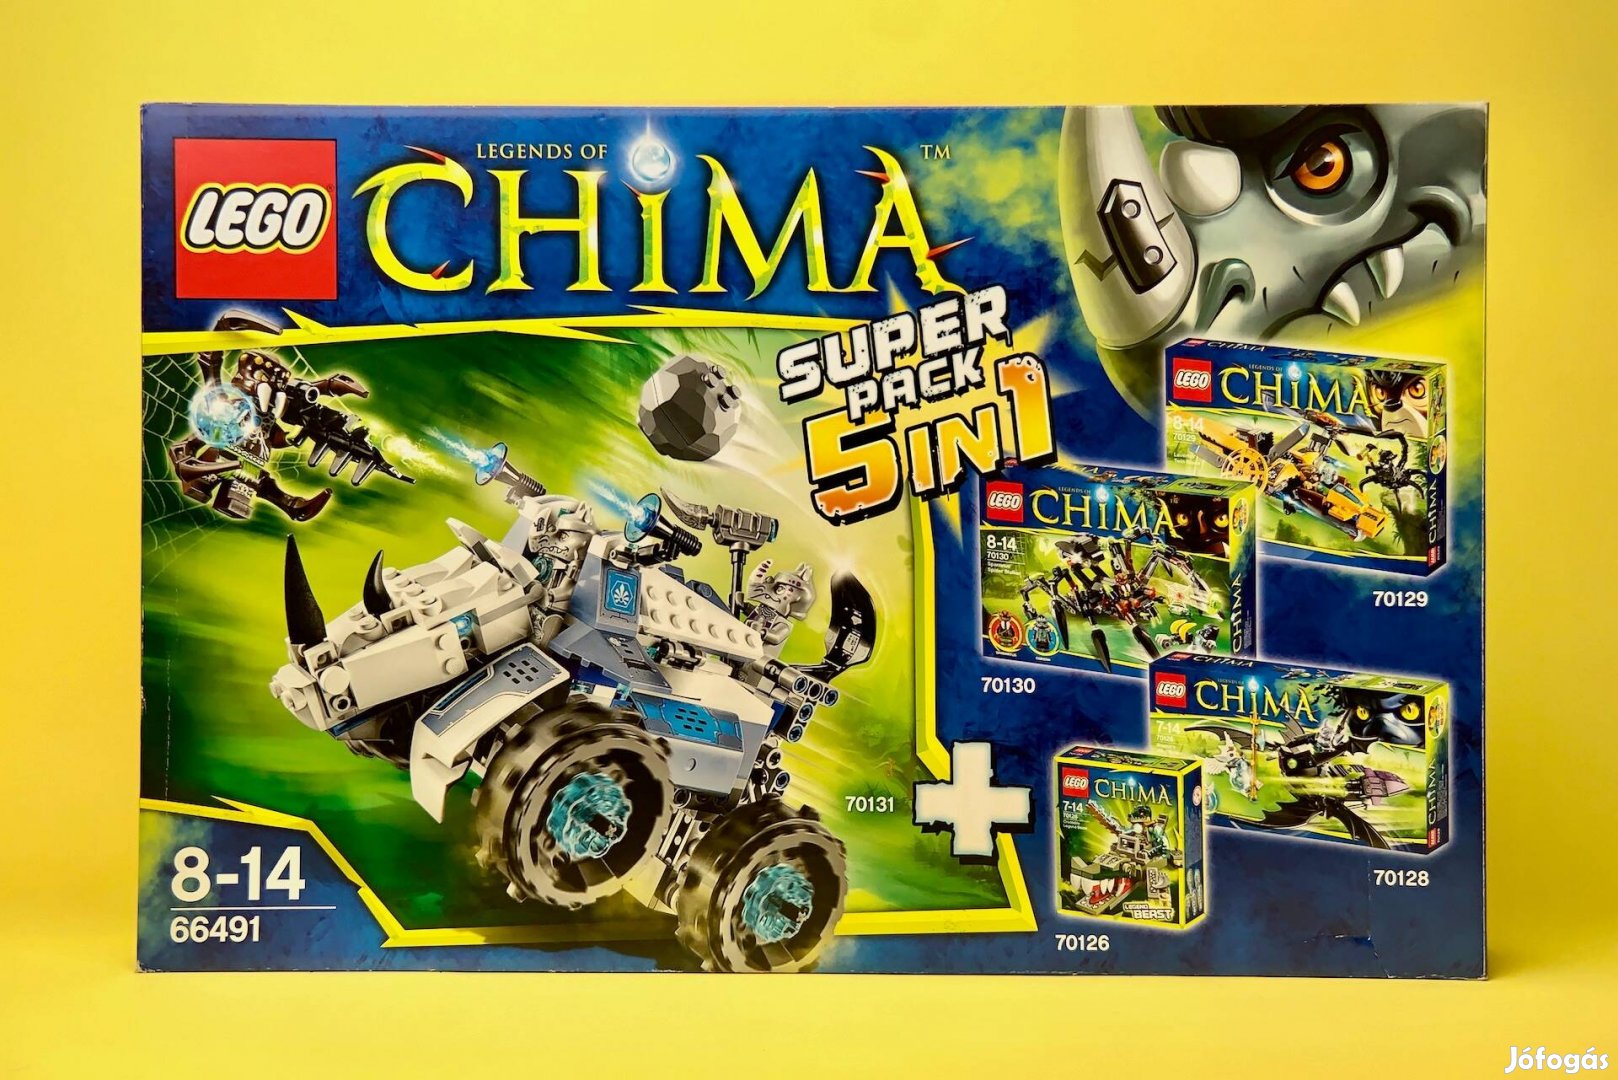 LEGO Legends of Chima 66491 Super Pack 5 in 1, Új, Bontatlan